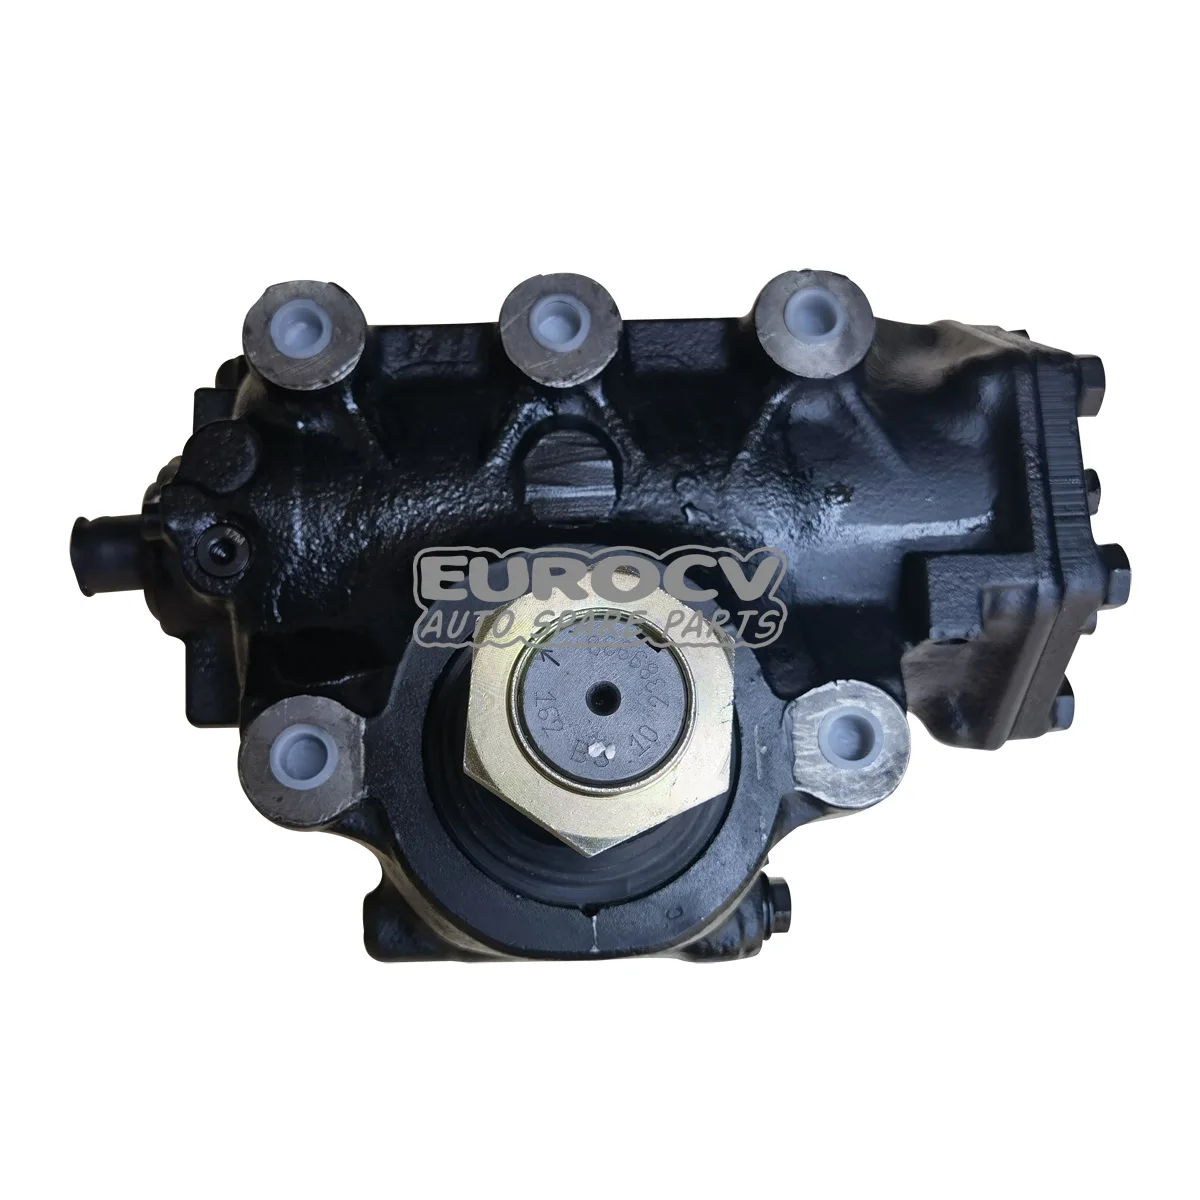 Eurocv Truck Parts MAN 81.46200.6411 Steering Gear (1600238014035)